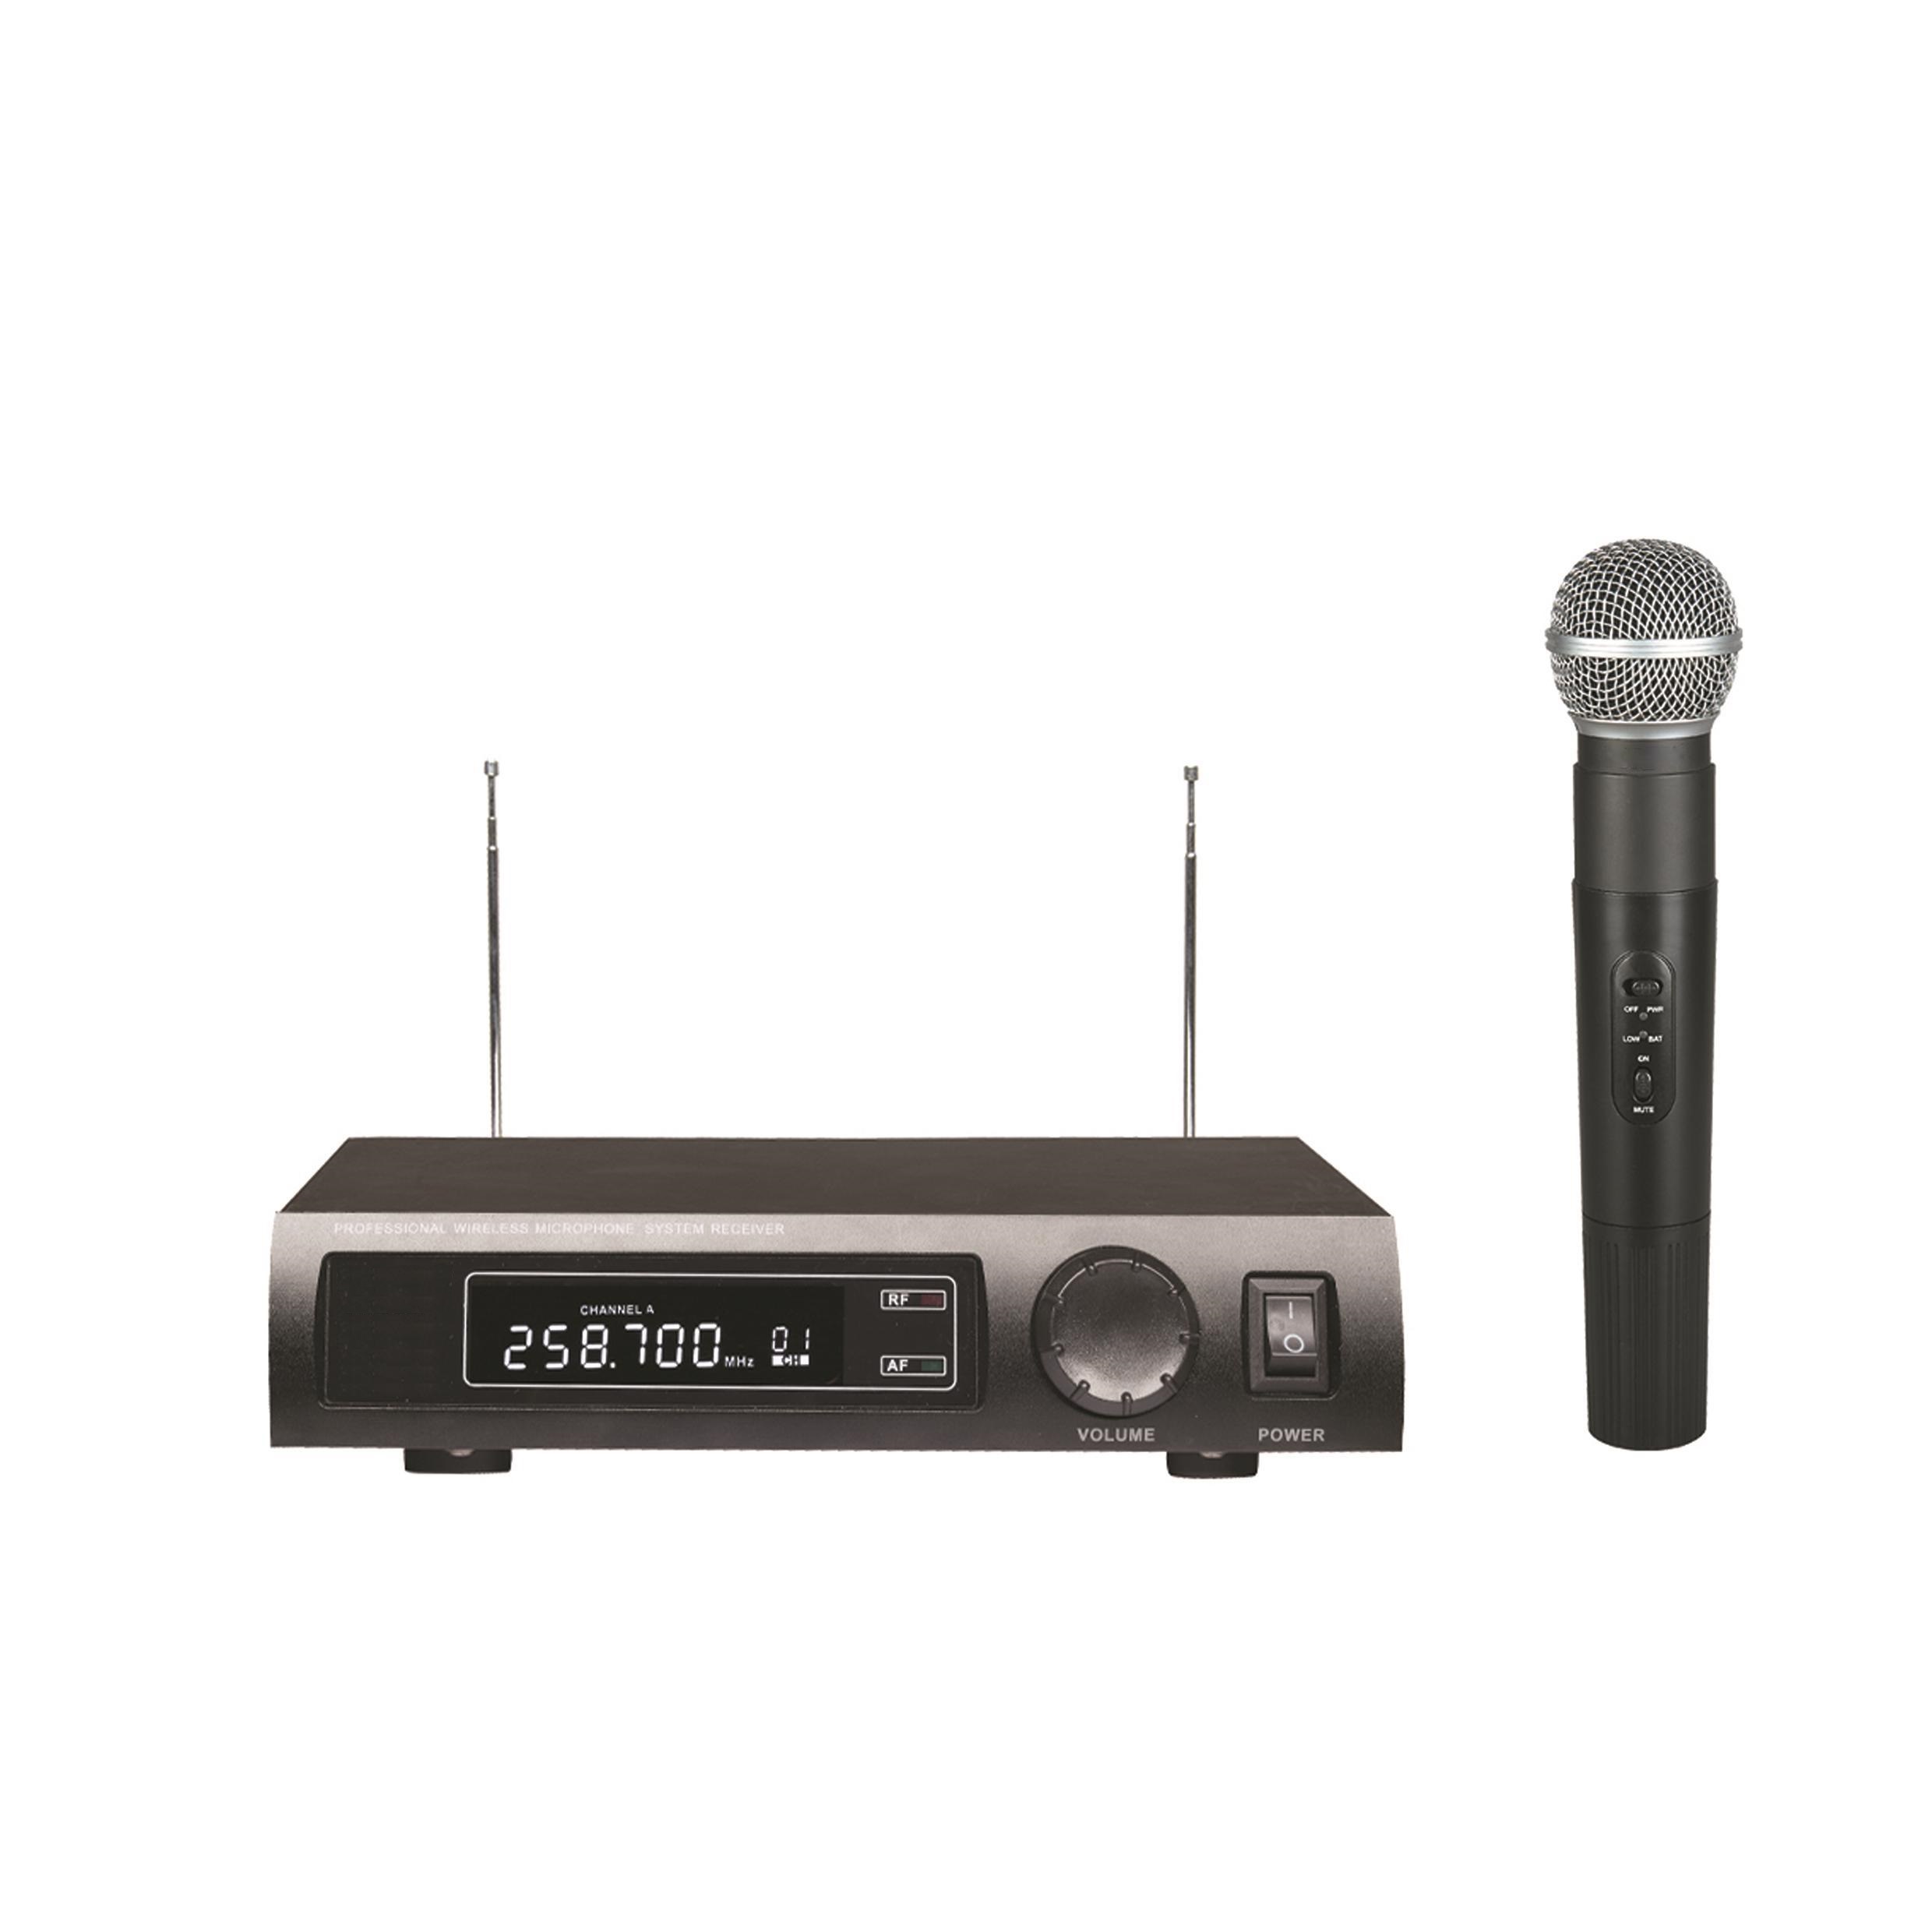 VHF004 Wireless microphones